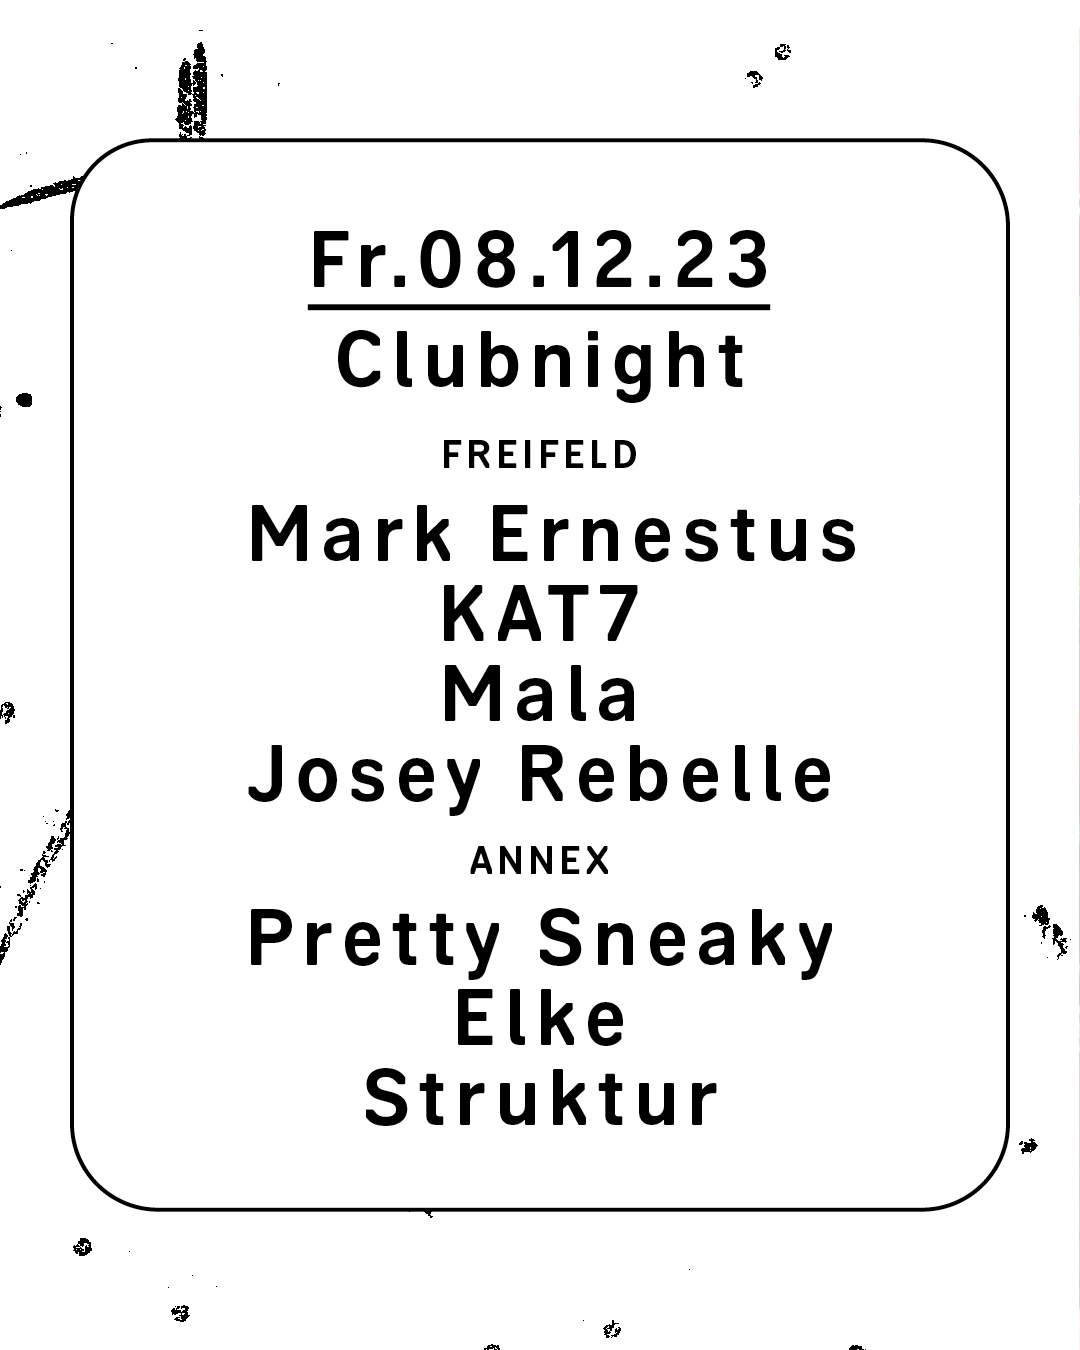 Clubnight - Mark Ernestus, KAT7, Mala, Josey Rebelle, Struktur, Elke, Pretty Sneaky - フライヤー裏